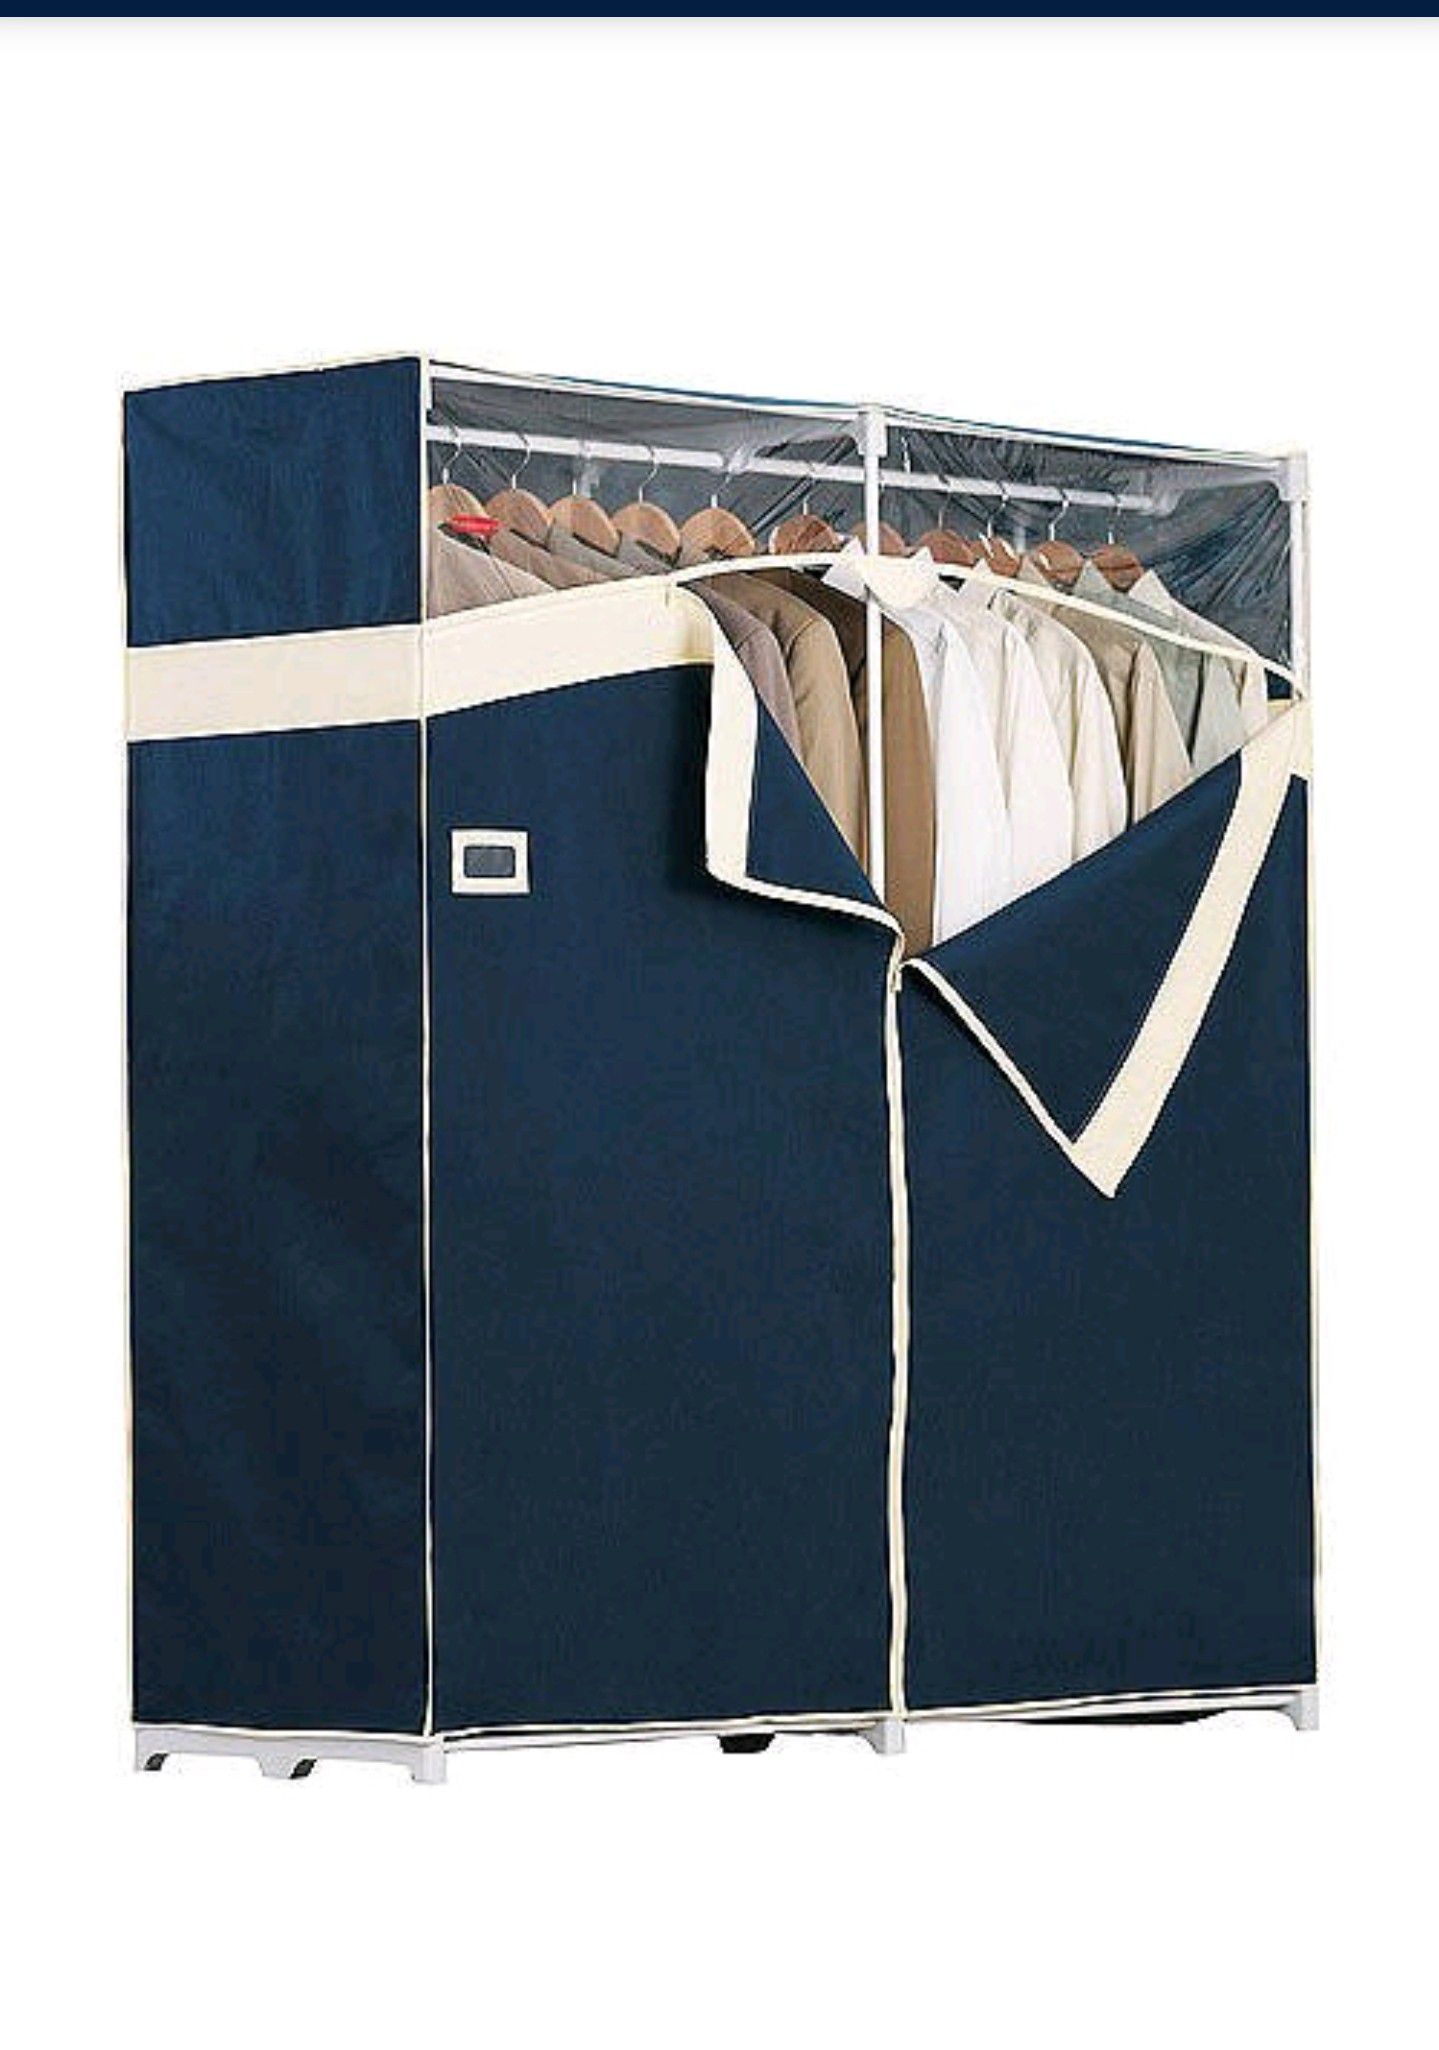 Rubbermaid Portable Garment Closet, 60 In. - Navy